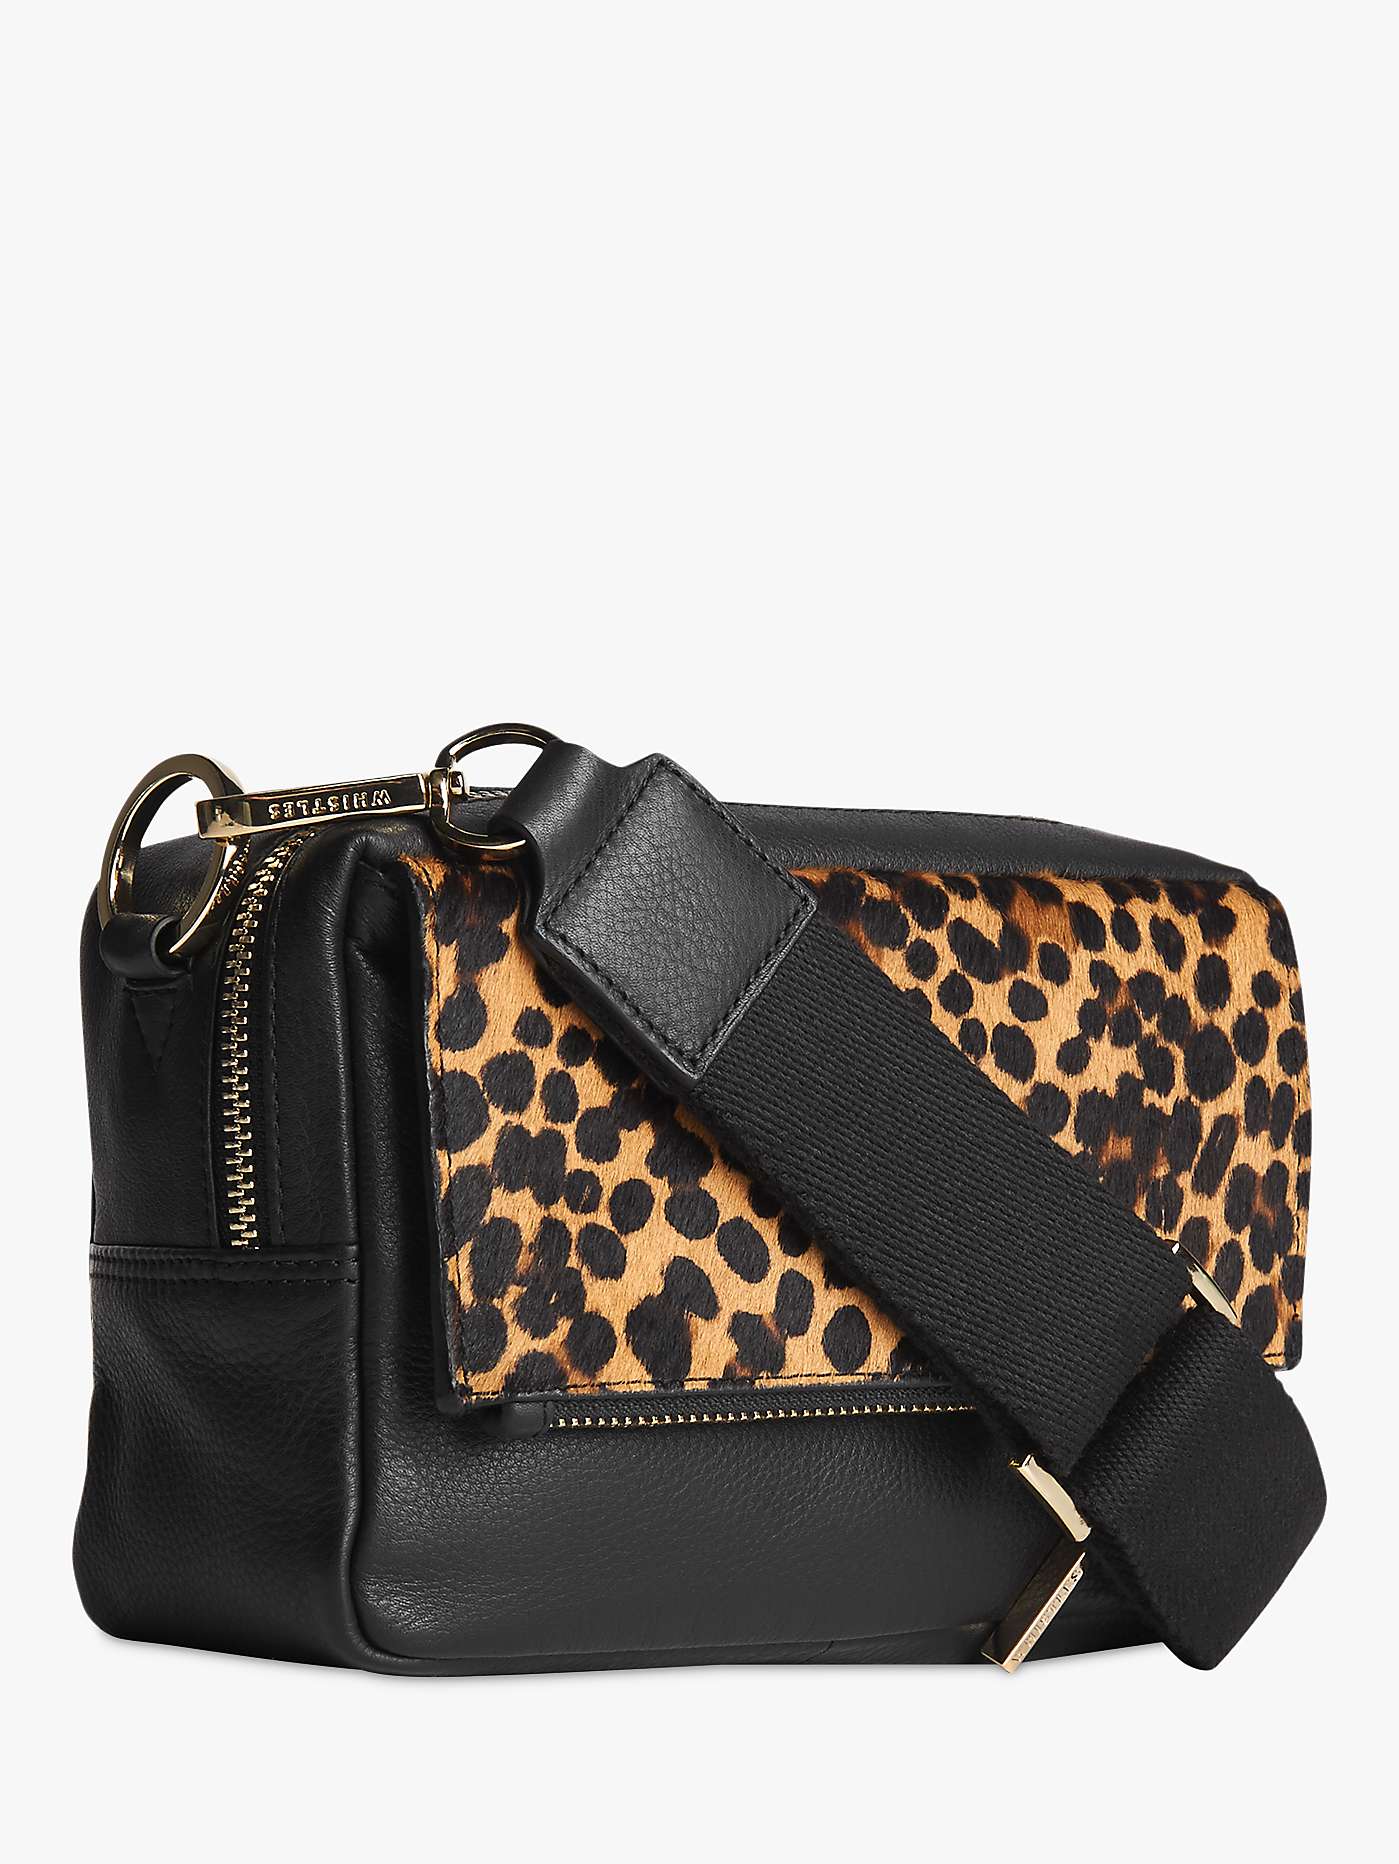 Whistles Bibi Leather Leopard Print Cross Body Bag, Black/Multi at John Lewis & Partners